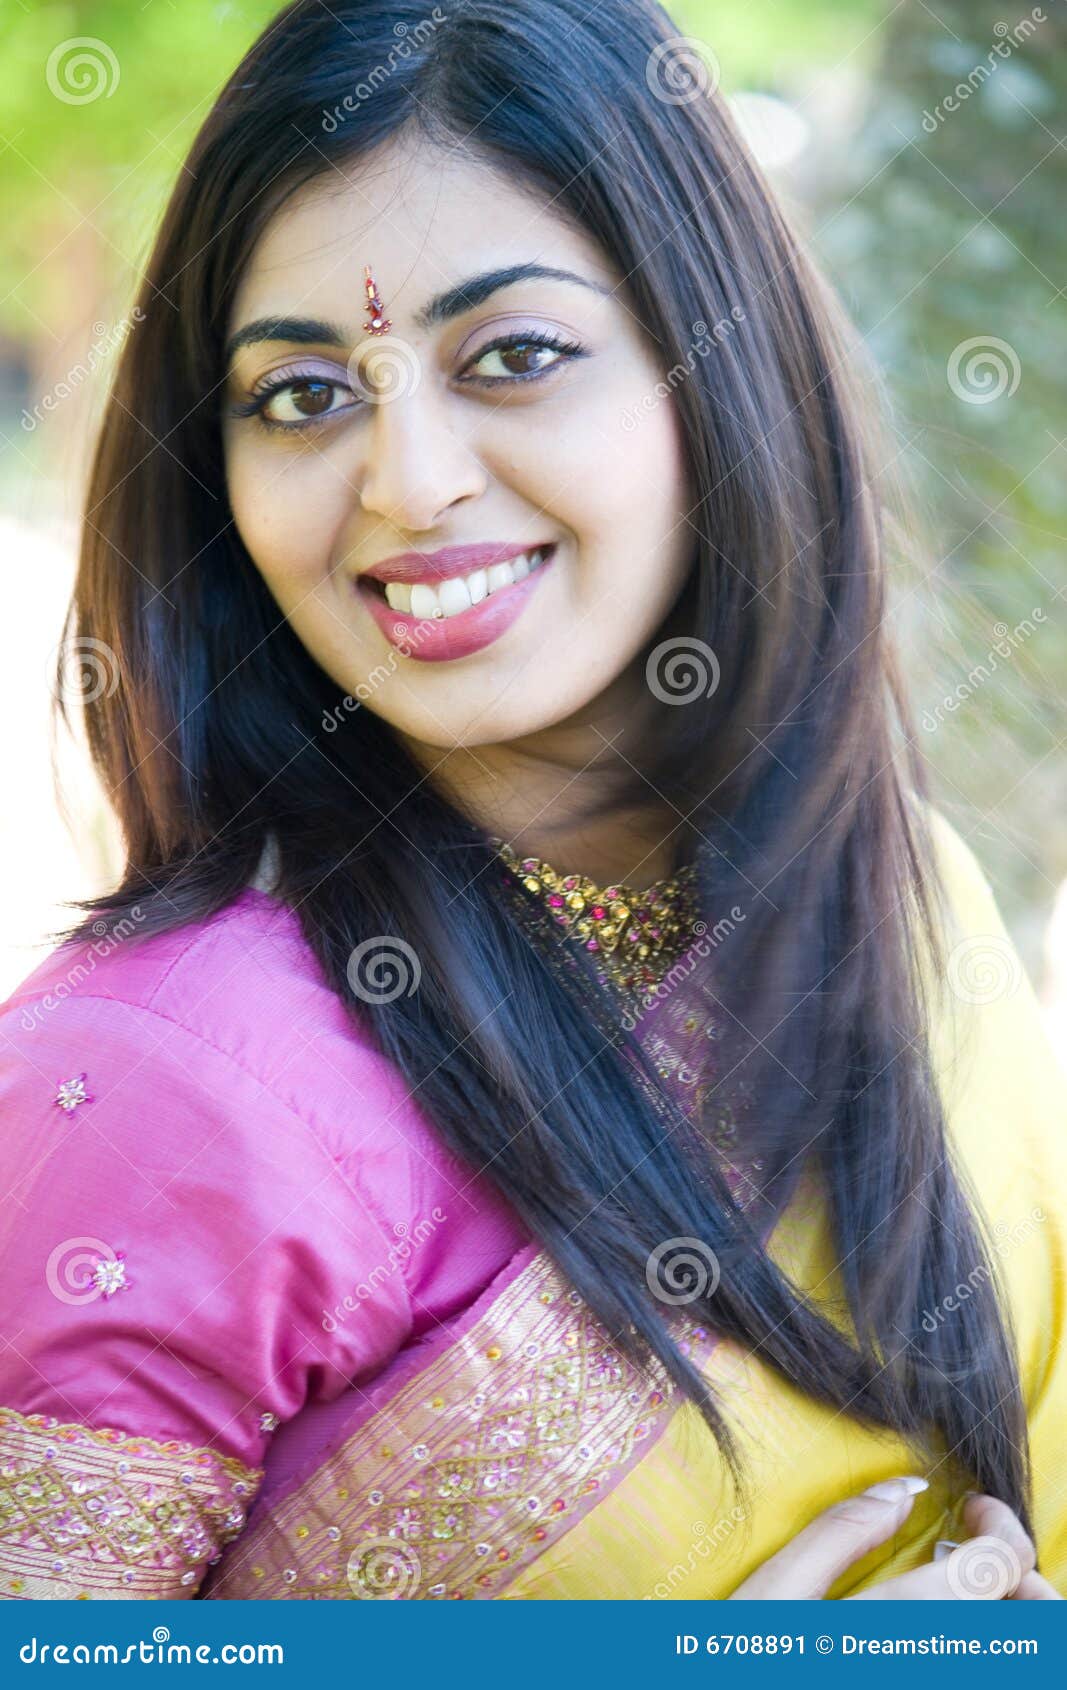 indian-girl-6708891.jpg